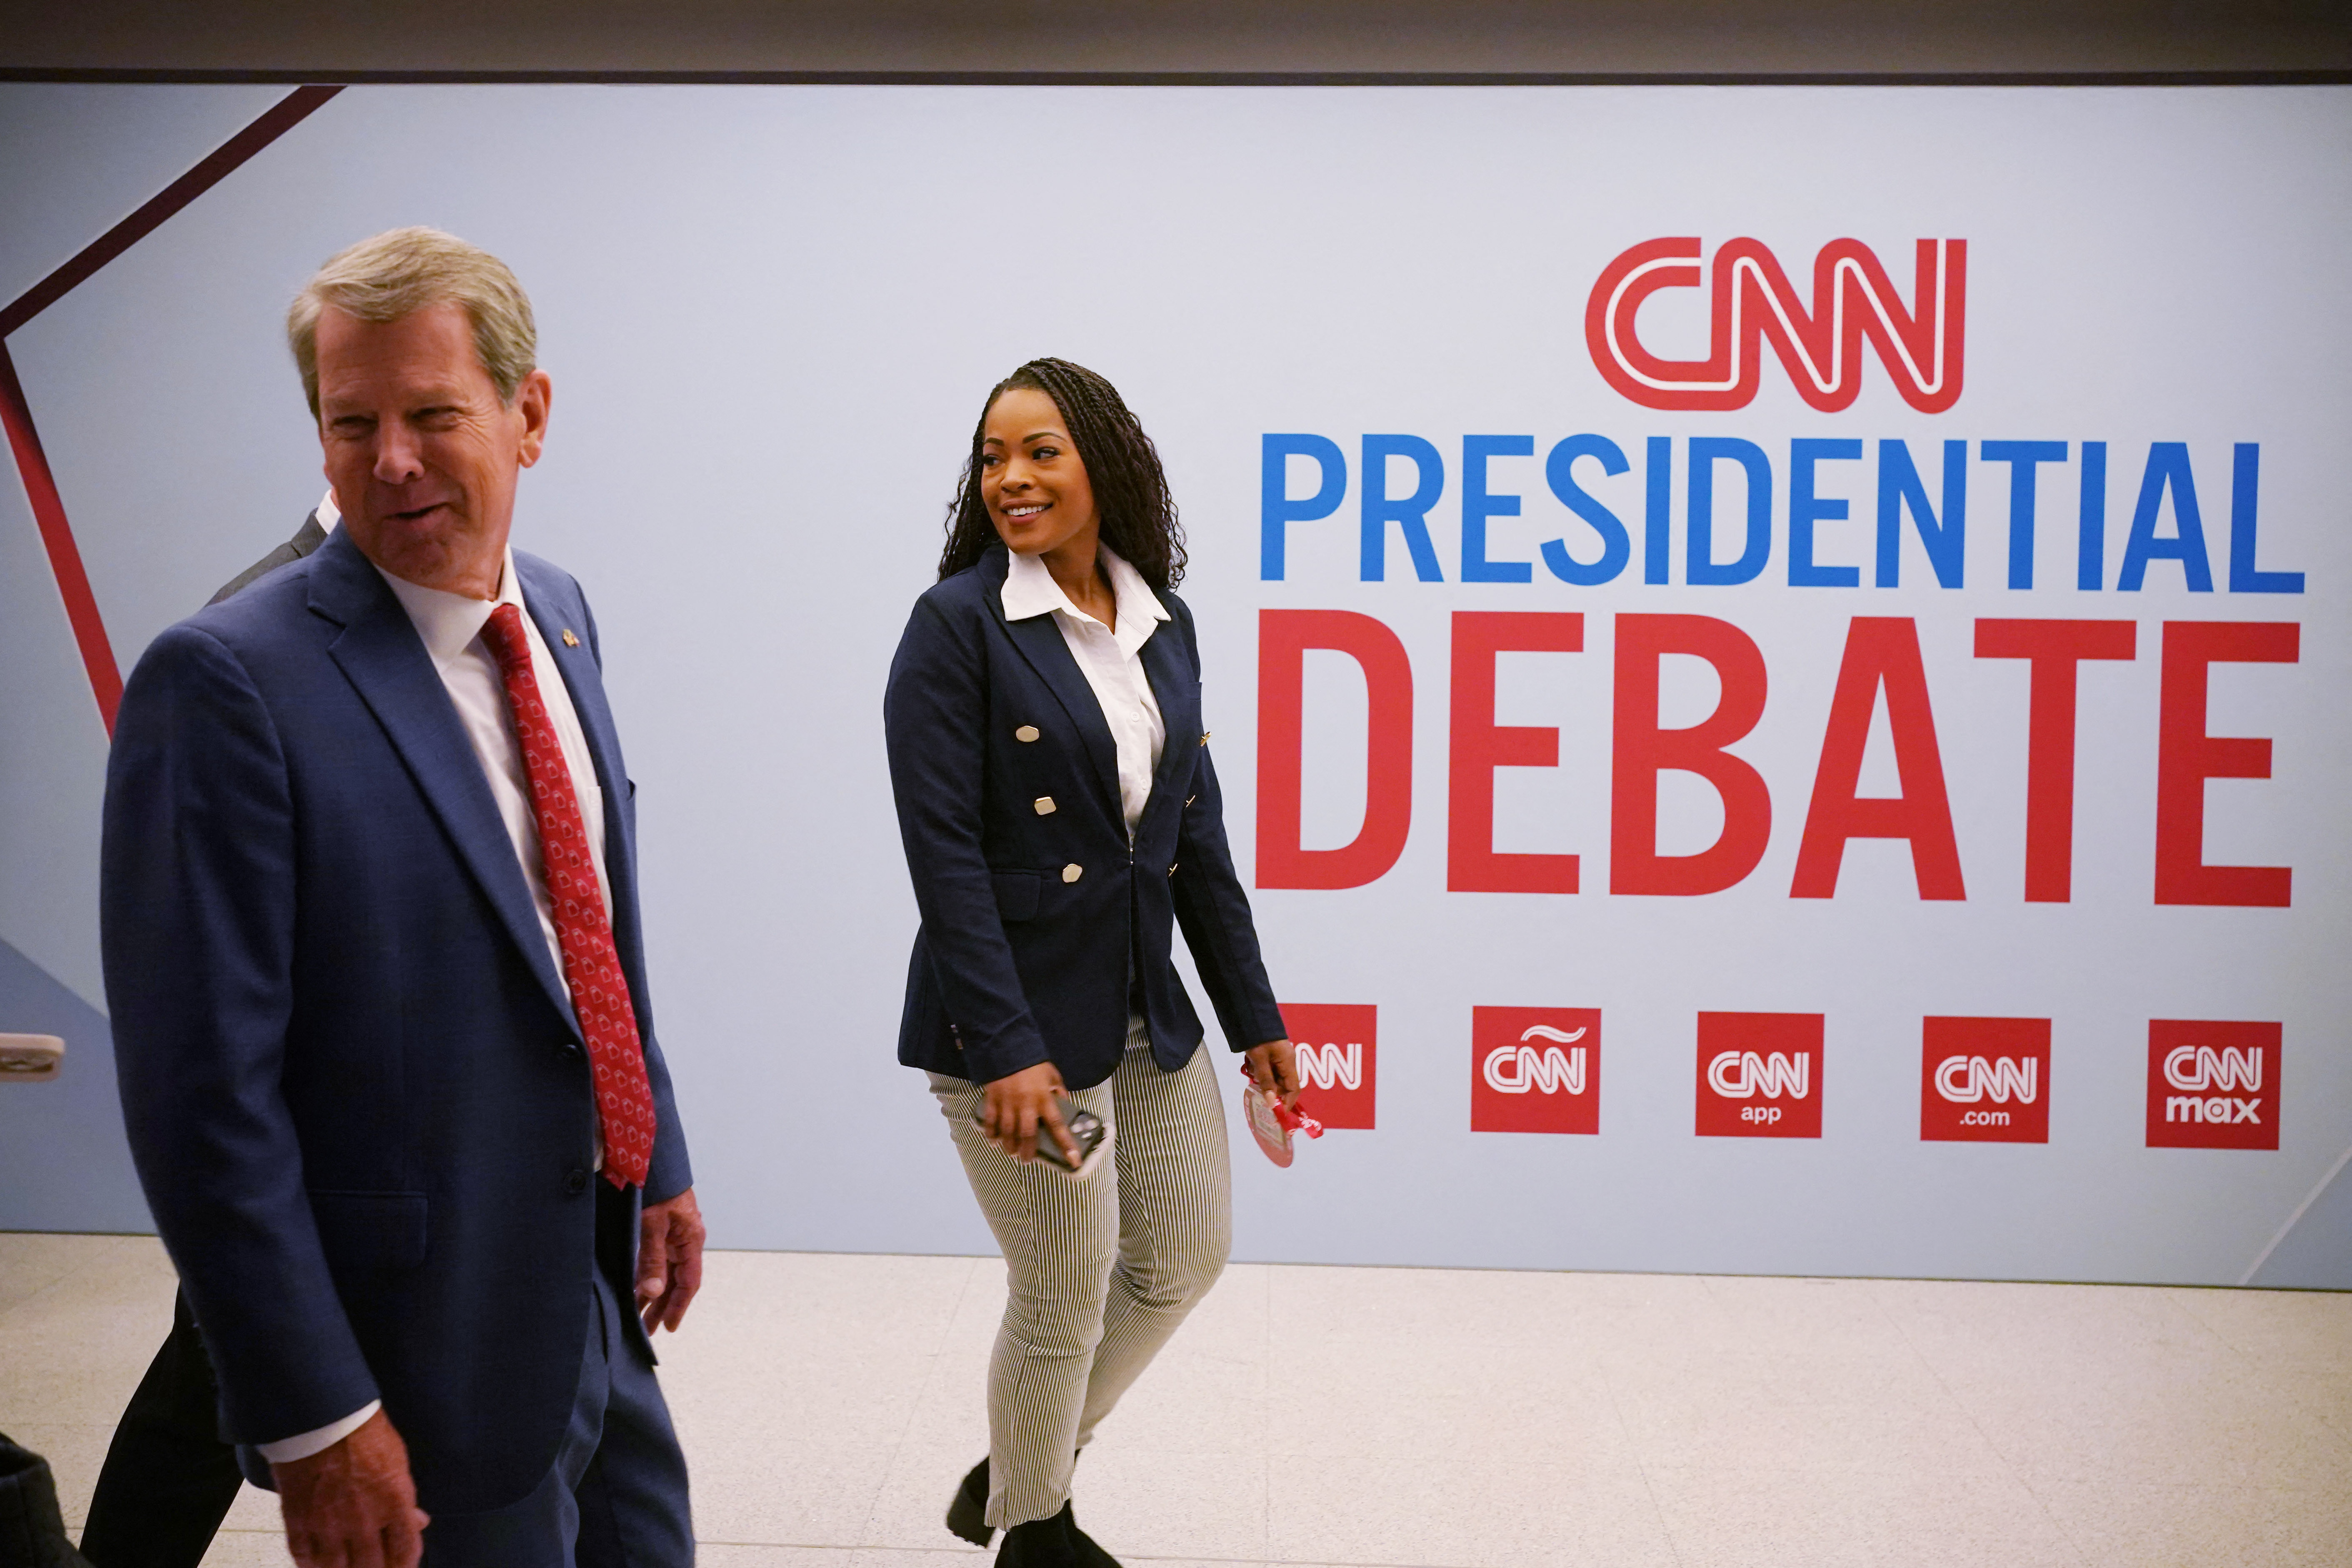 Biden, Trump face off in first presidential debate in Atlanta